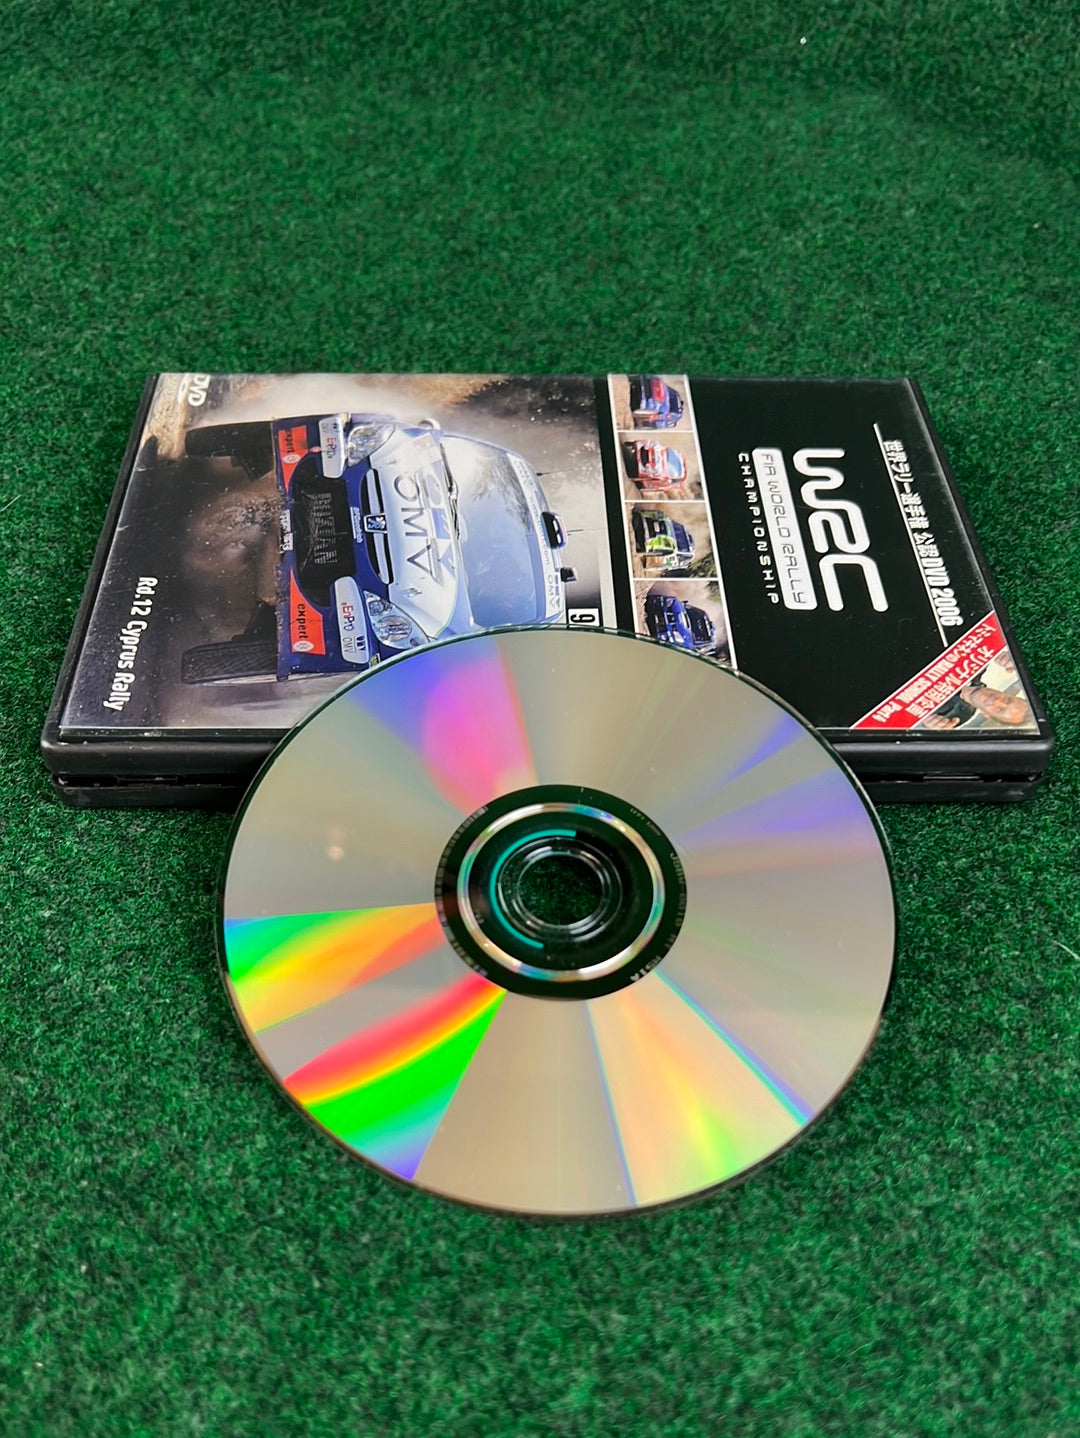 WRC DVD - World Rally Championship 2006 Round 9 & 10 Set